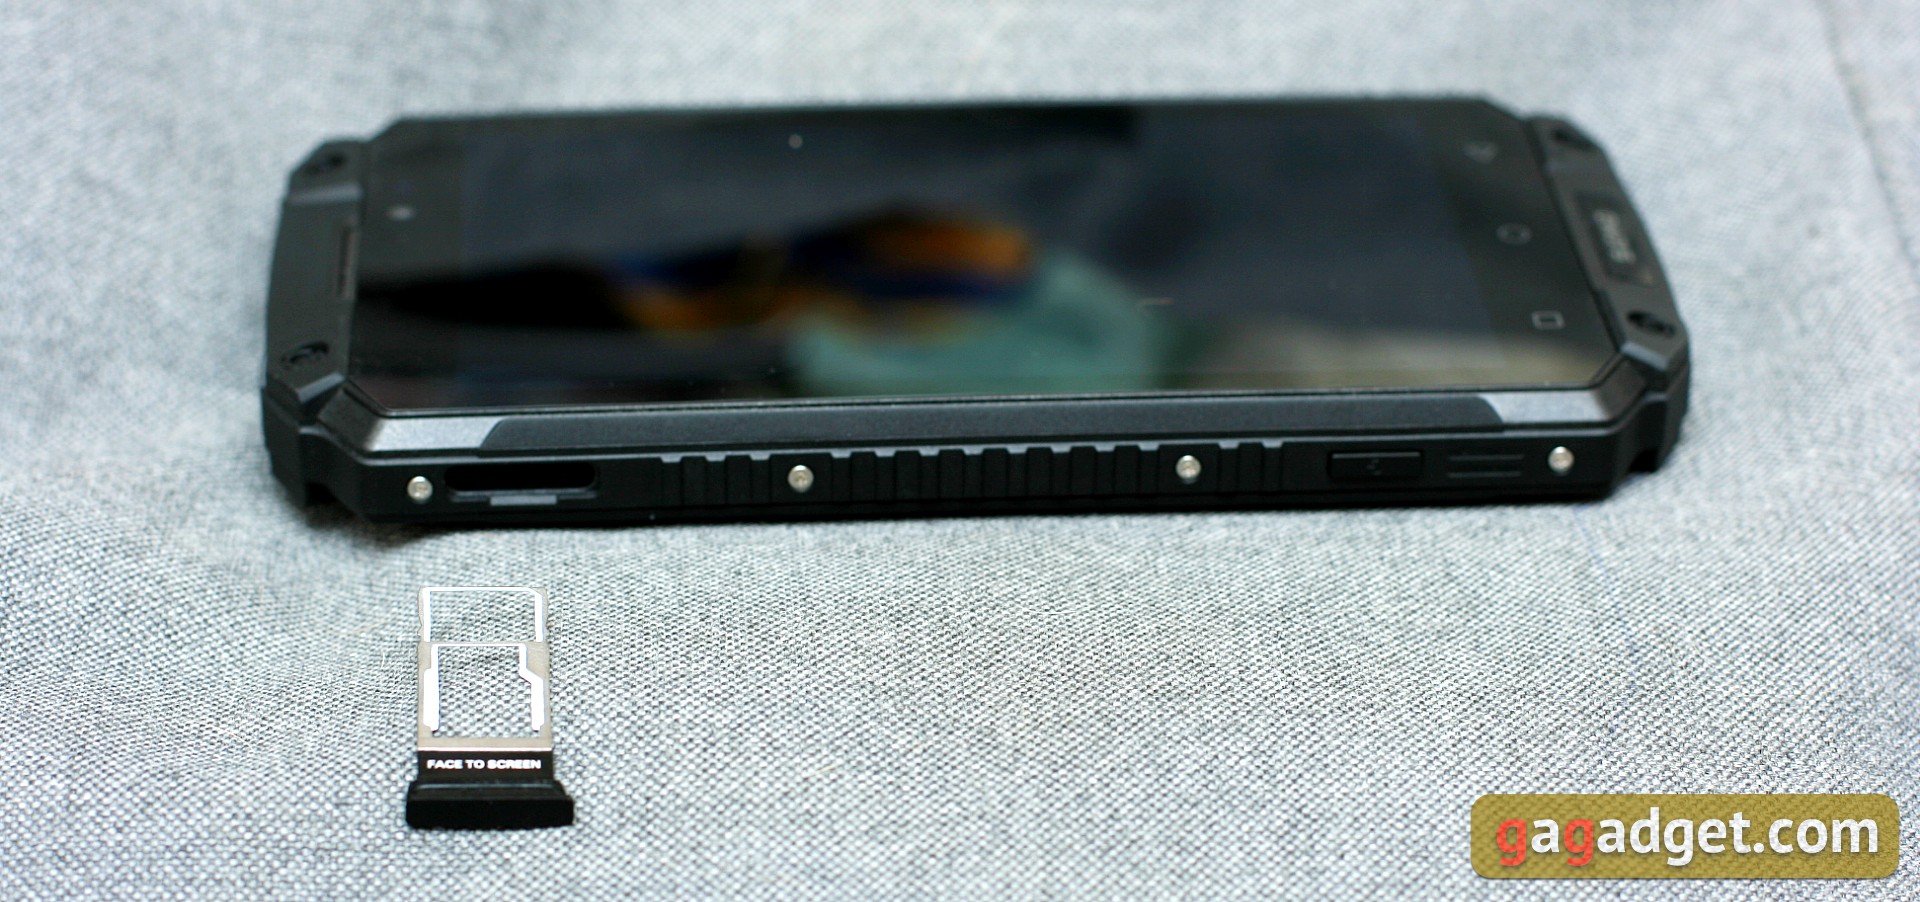 Обзор Sigma Mobile X-treme PQ39 MAX: современный защищённый батарейкофон-8